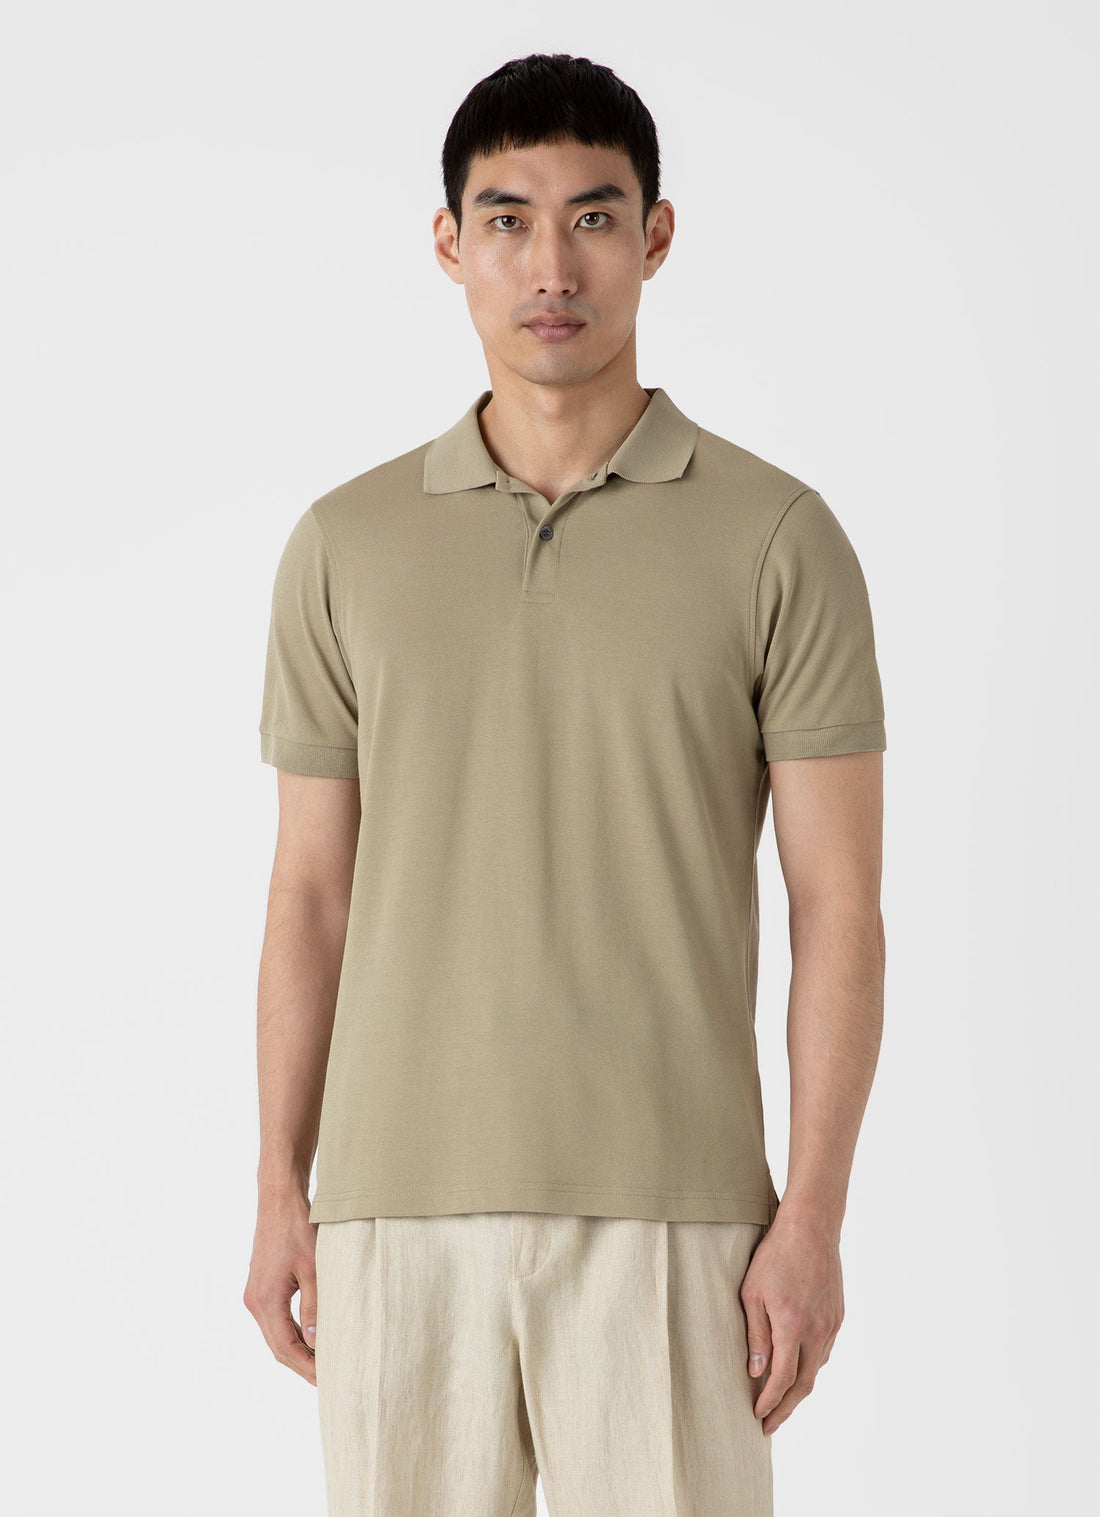 Men's Piqué Polo Shirt in Pale Khaki